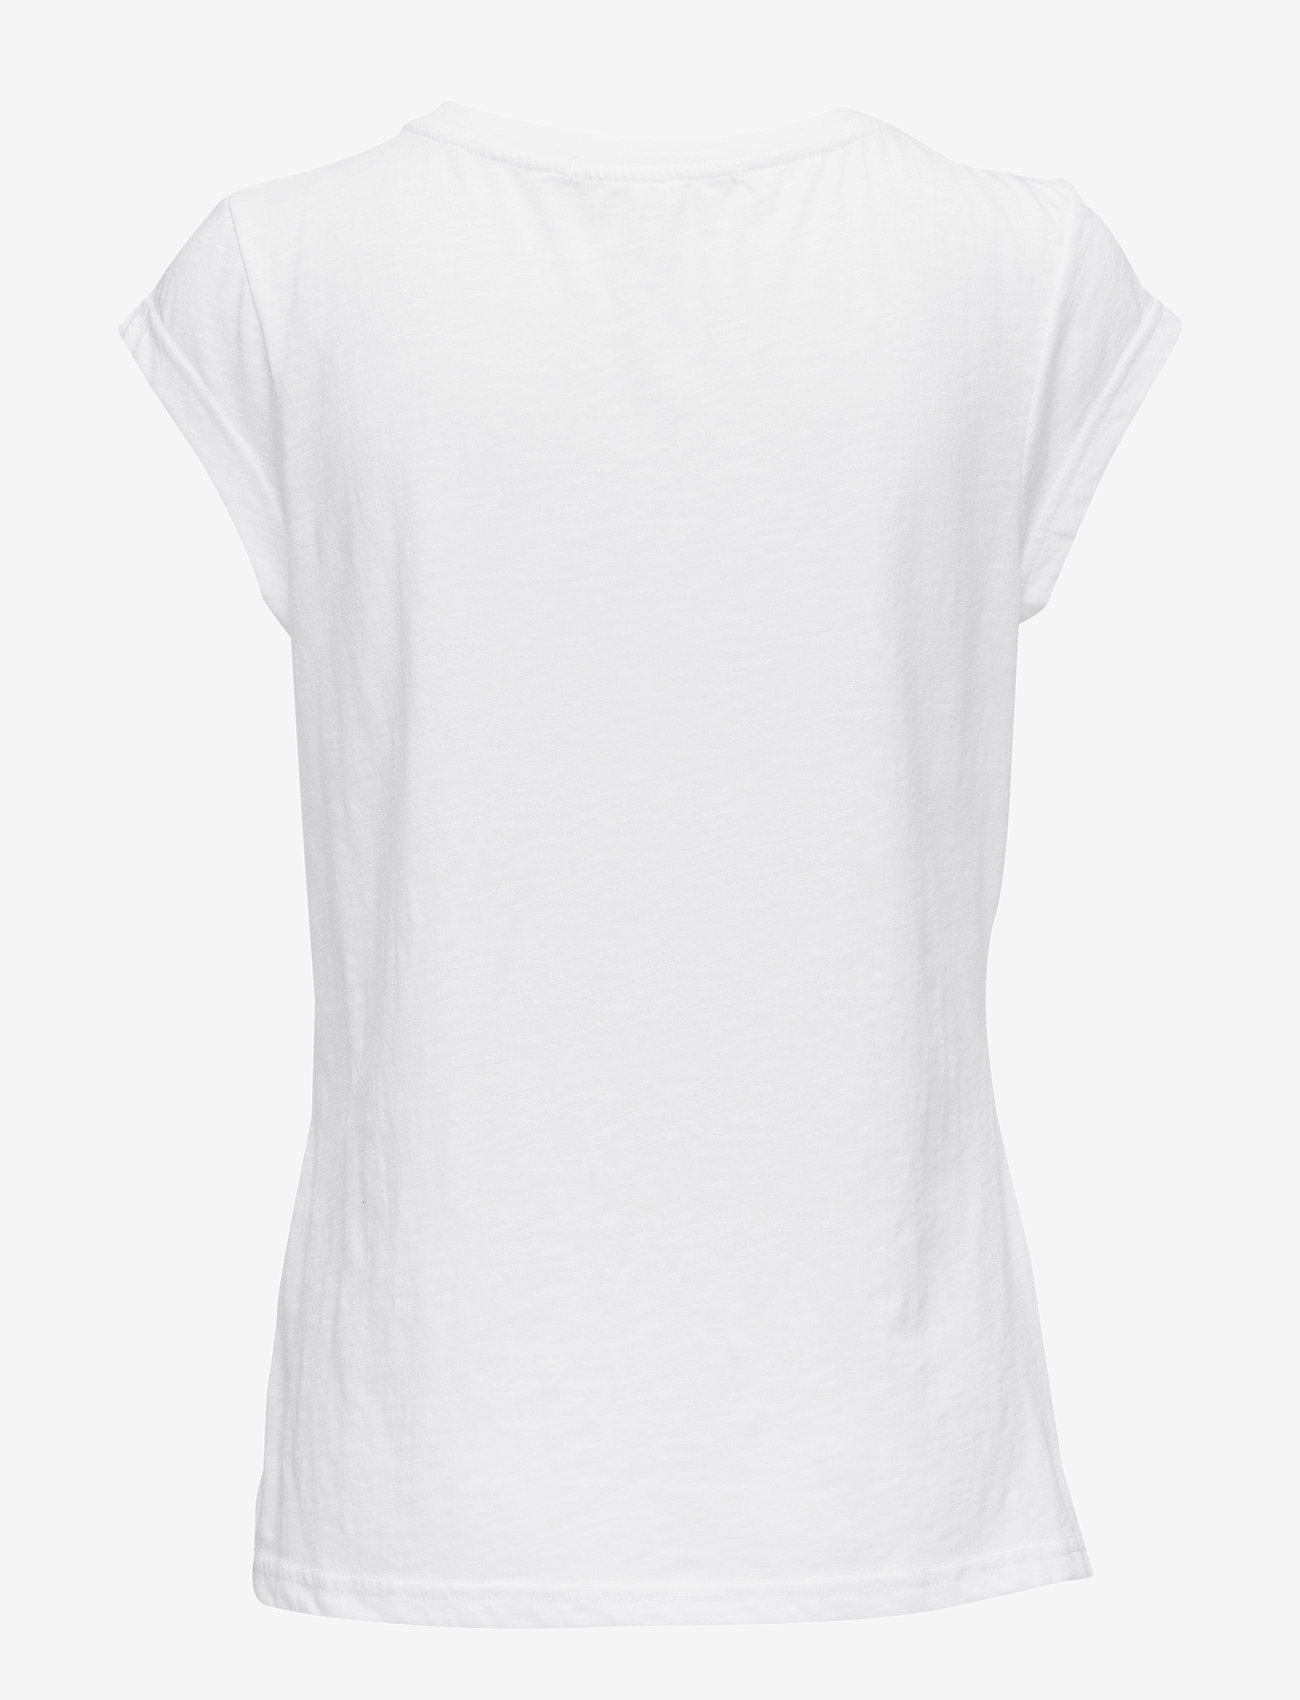 Coster Copenhagen - CC Heart basic t-shirt - lowest prices - white - 1